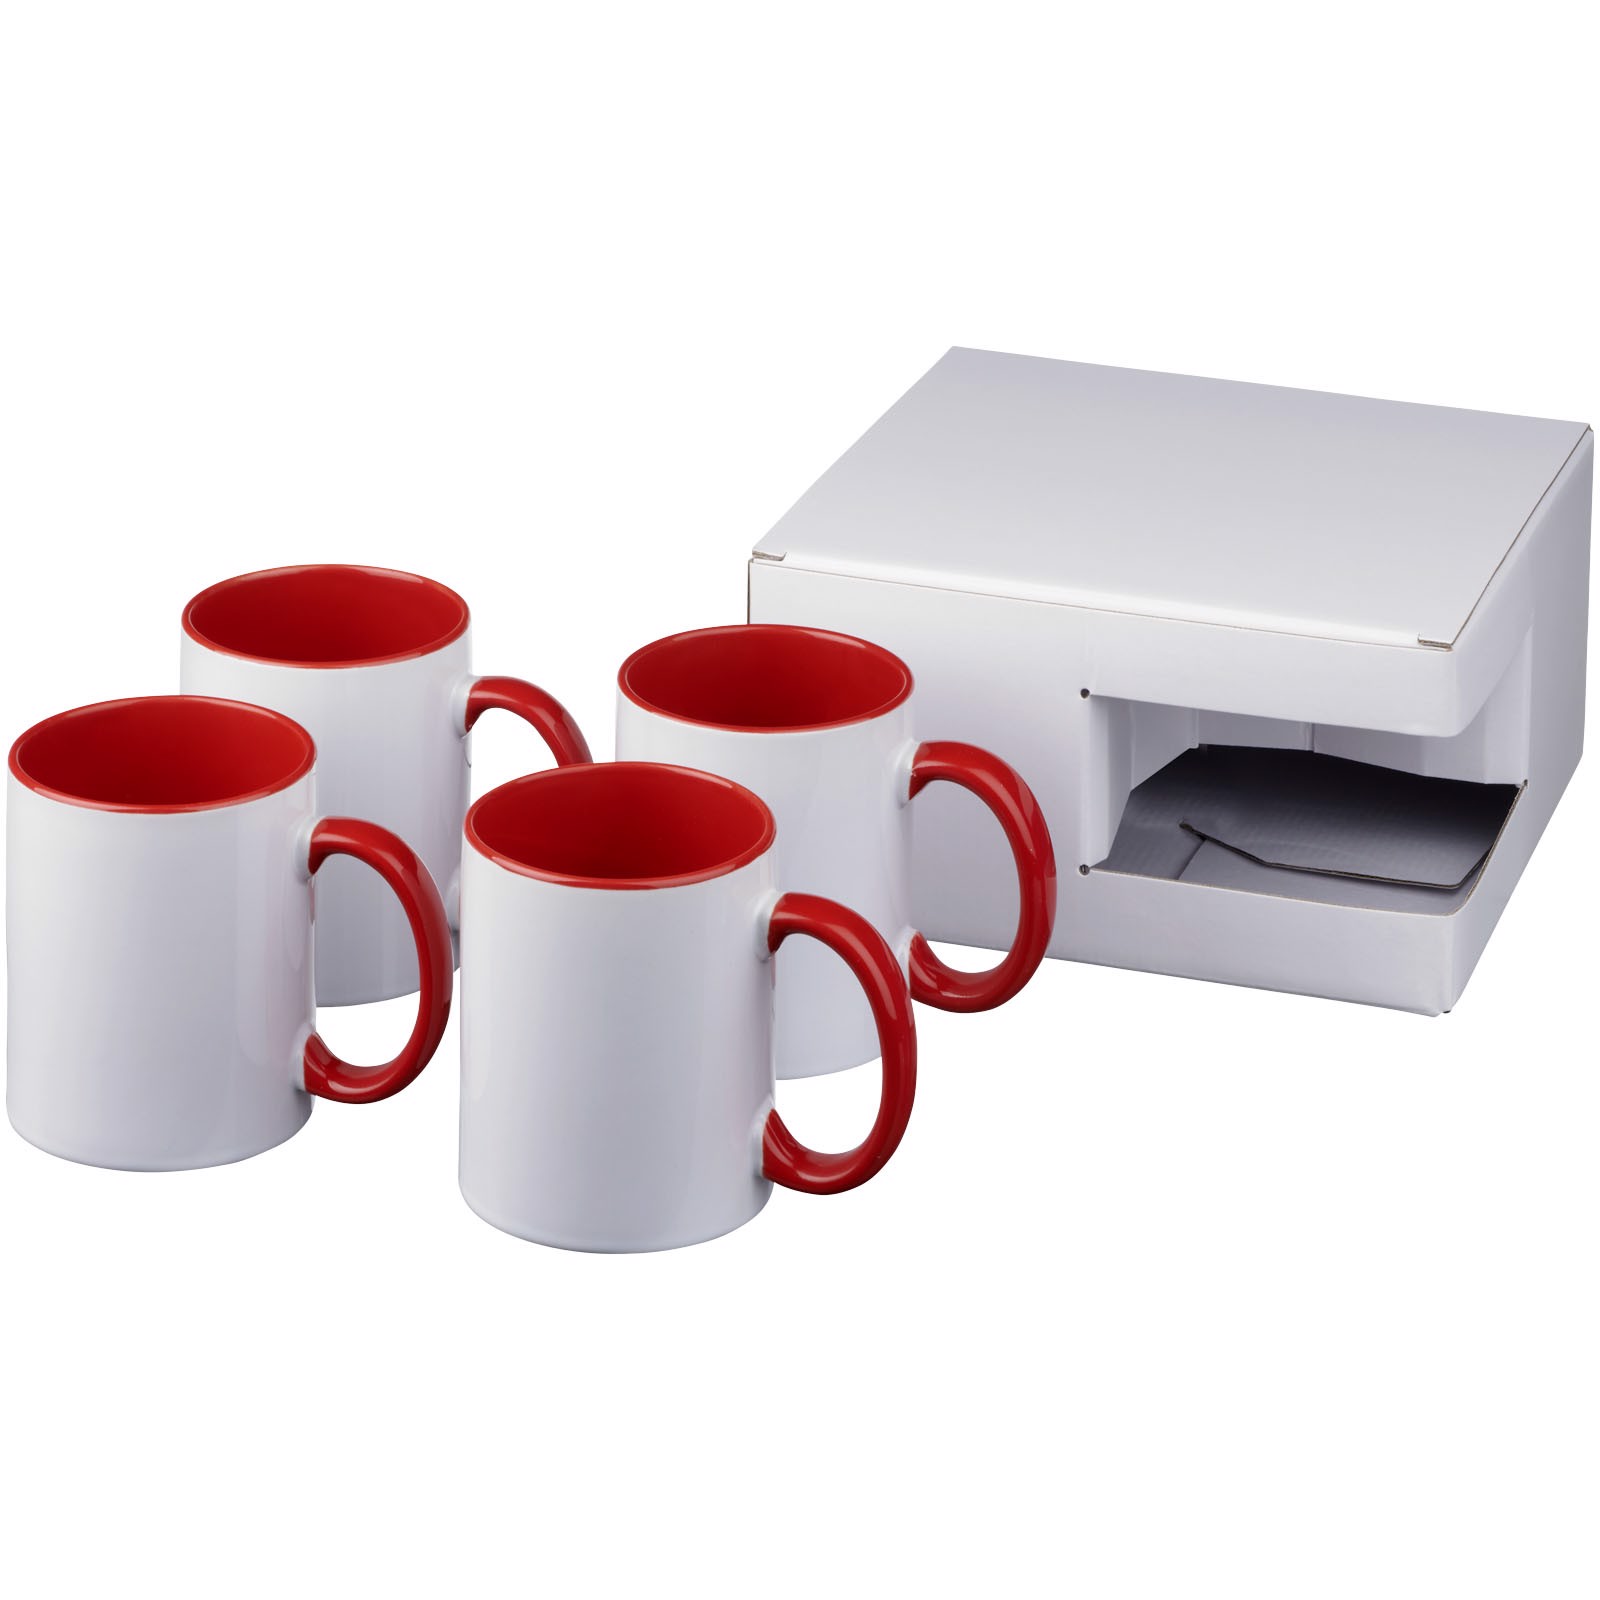 Ceramic sublimation mug 4-pieces gift set - Red